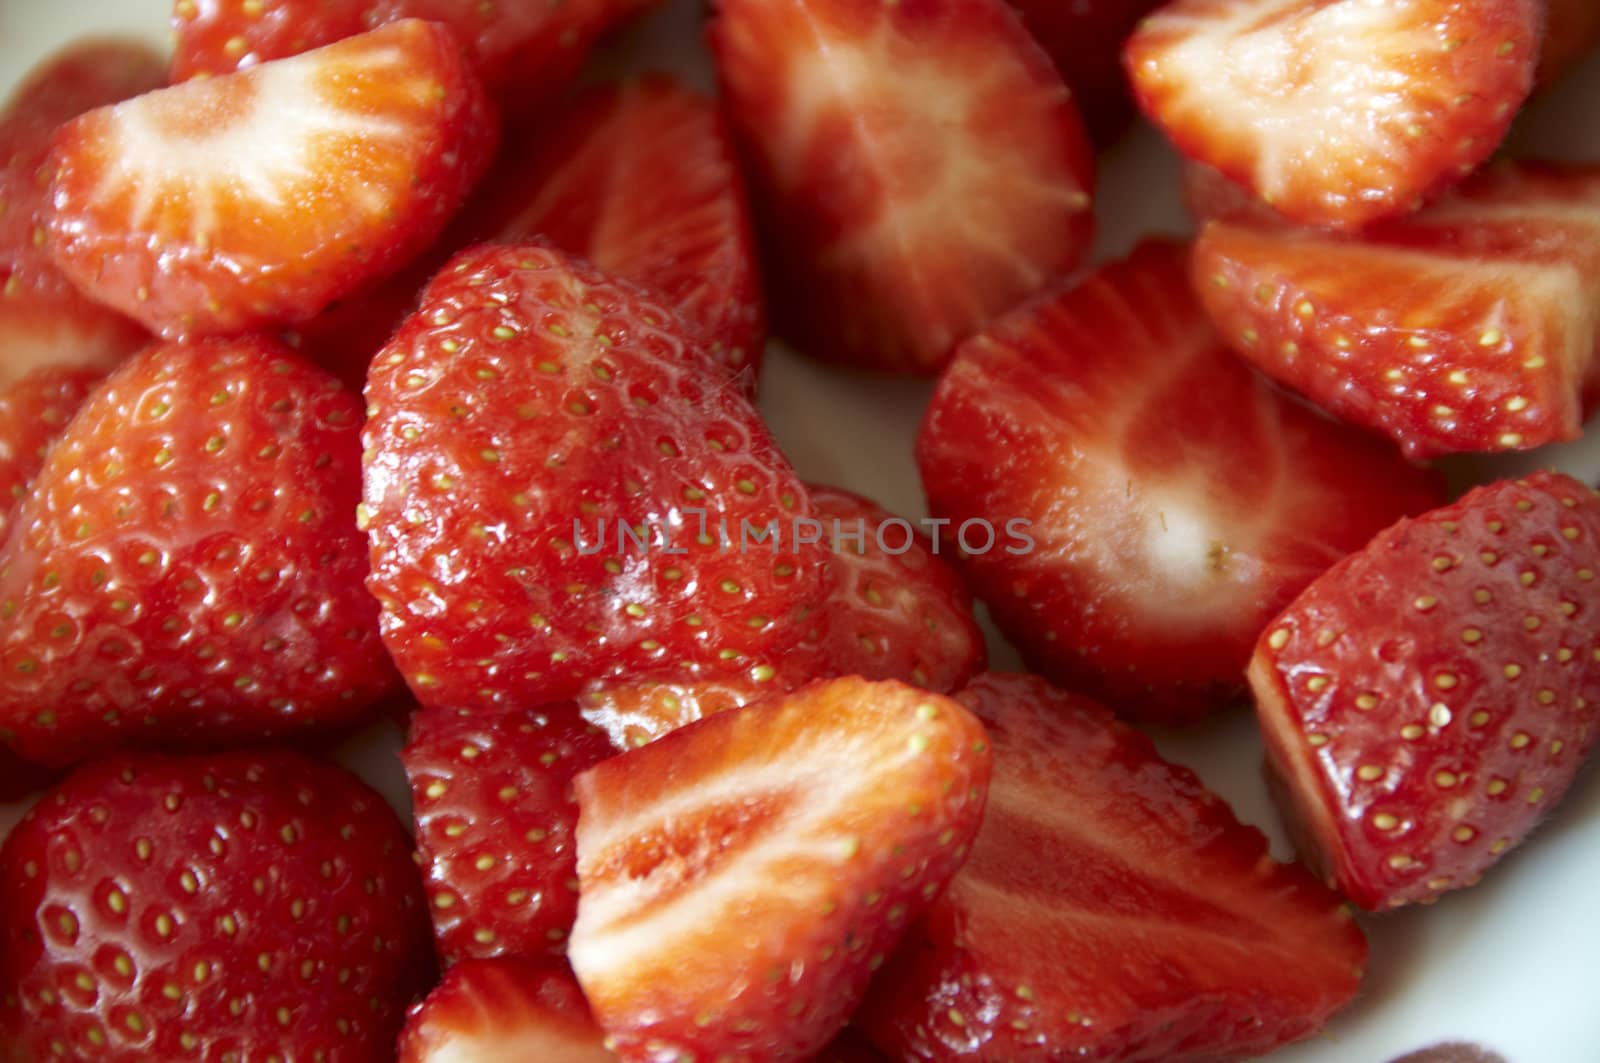 Strawberry by mbtaichi